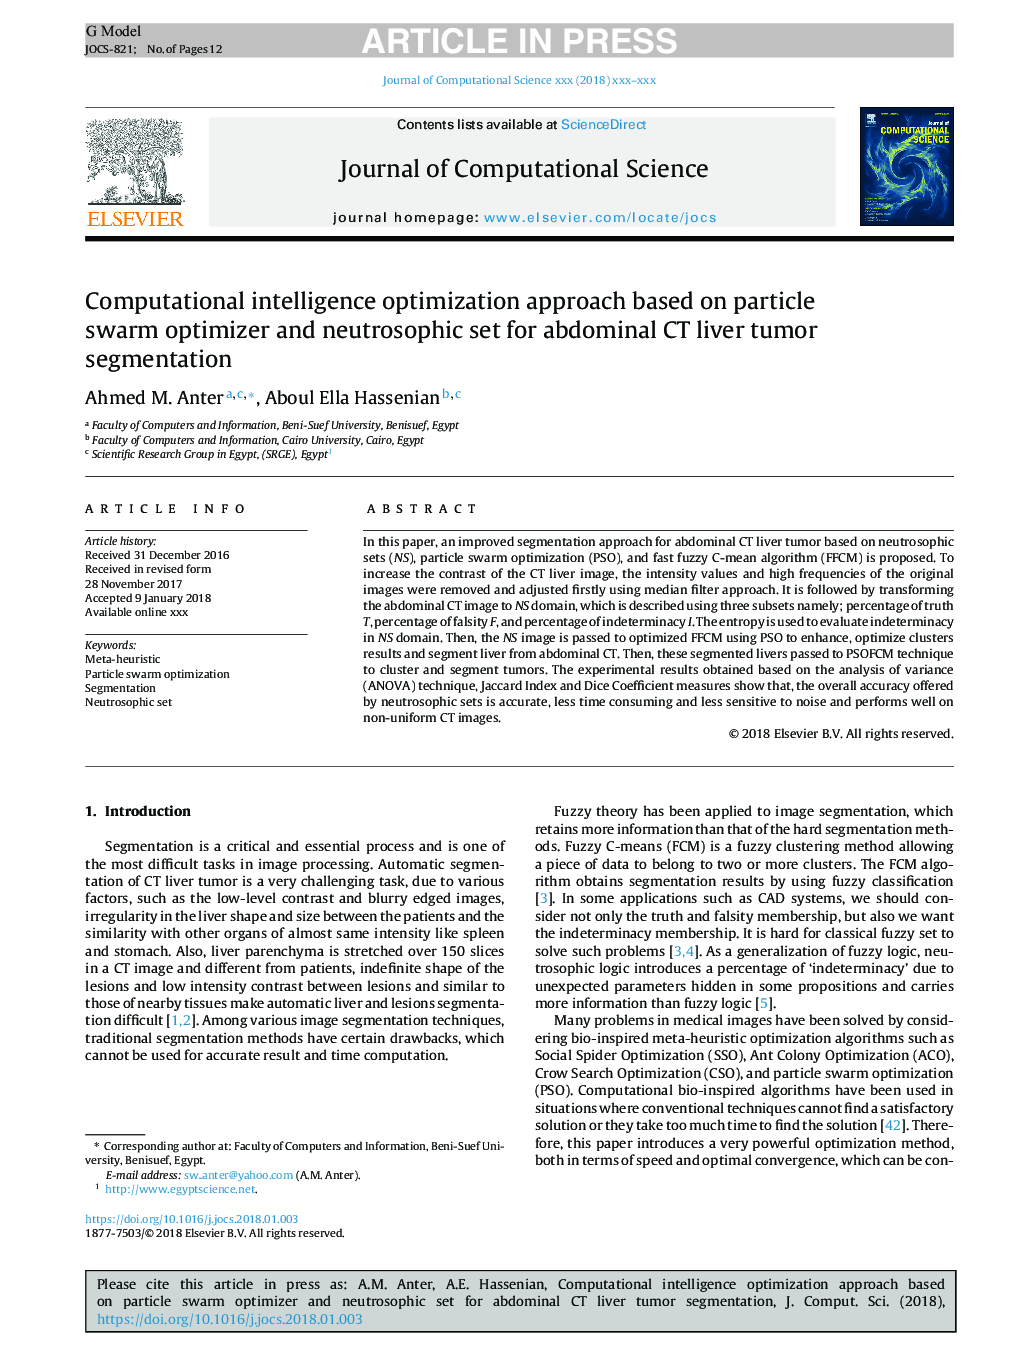 Computational intelligence optimization approach based on particle swarm optimizer and neutrosophic set for abdominal CT liver tumor segmentation